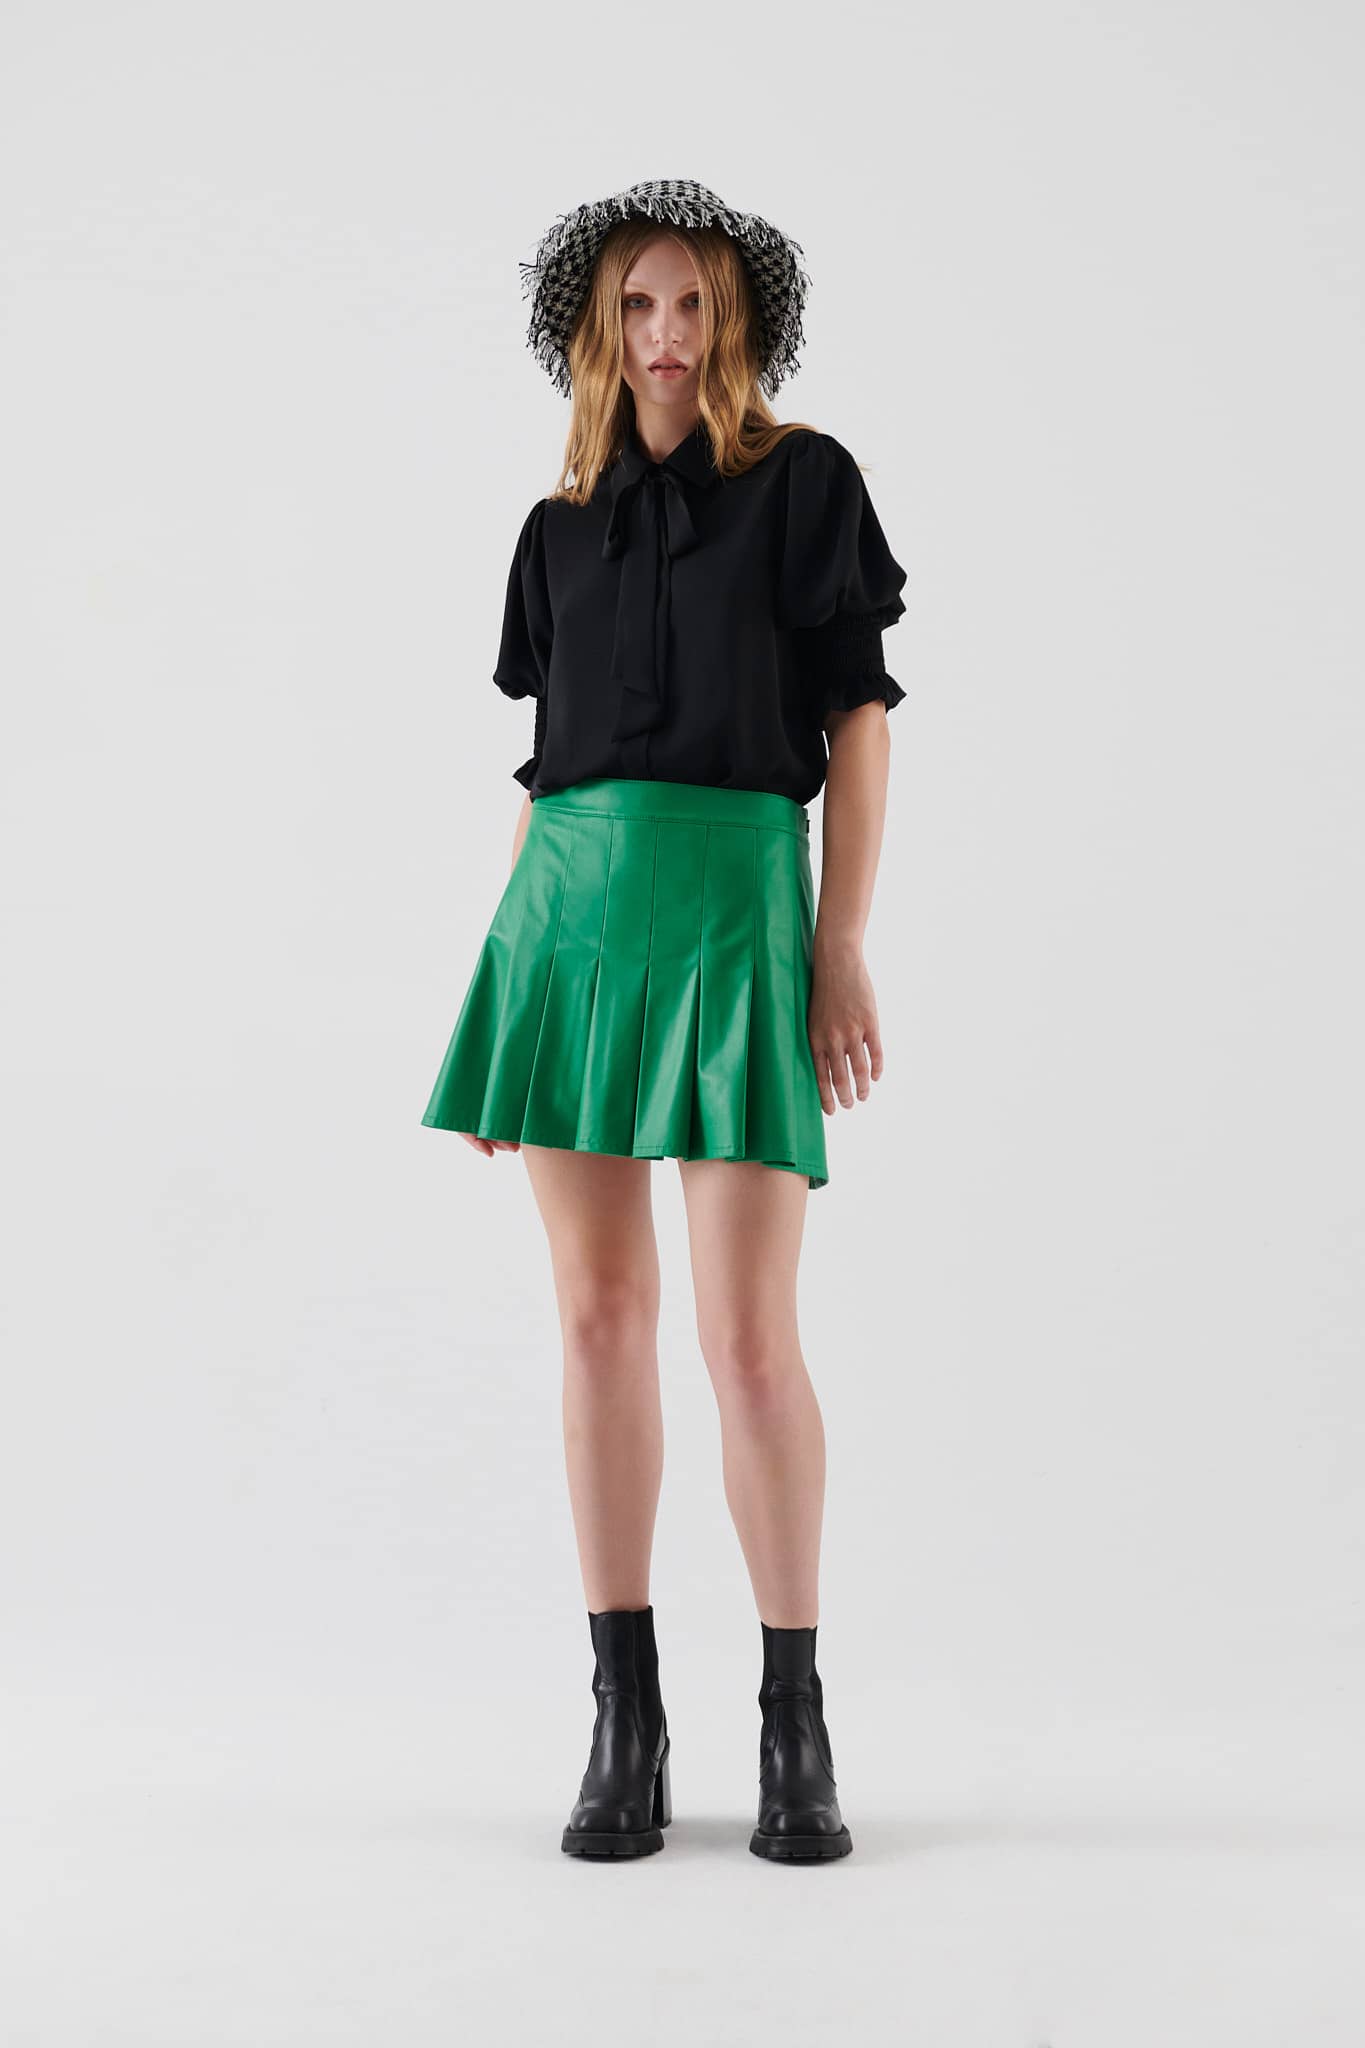 Leather Look Green Mini Skirt --[GREEN]